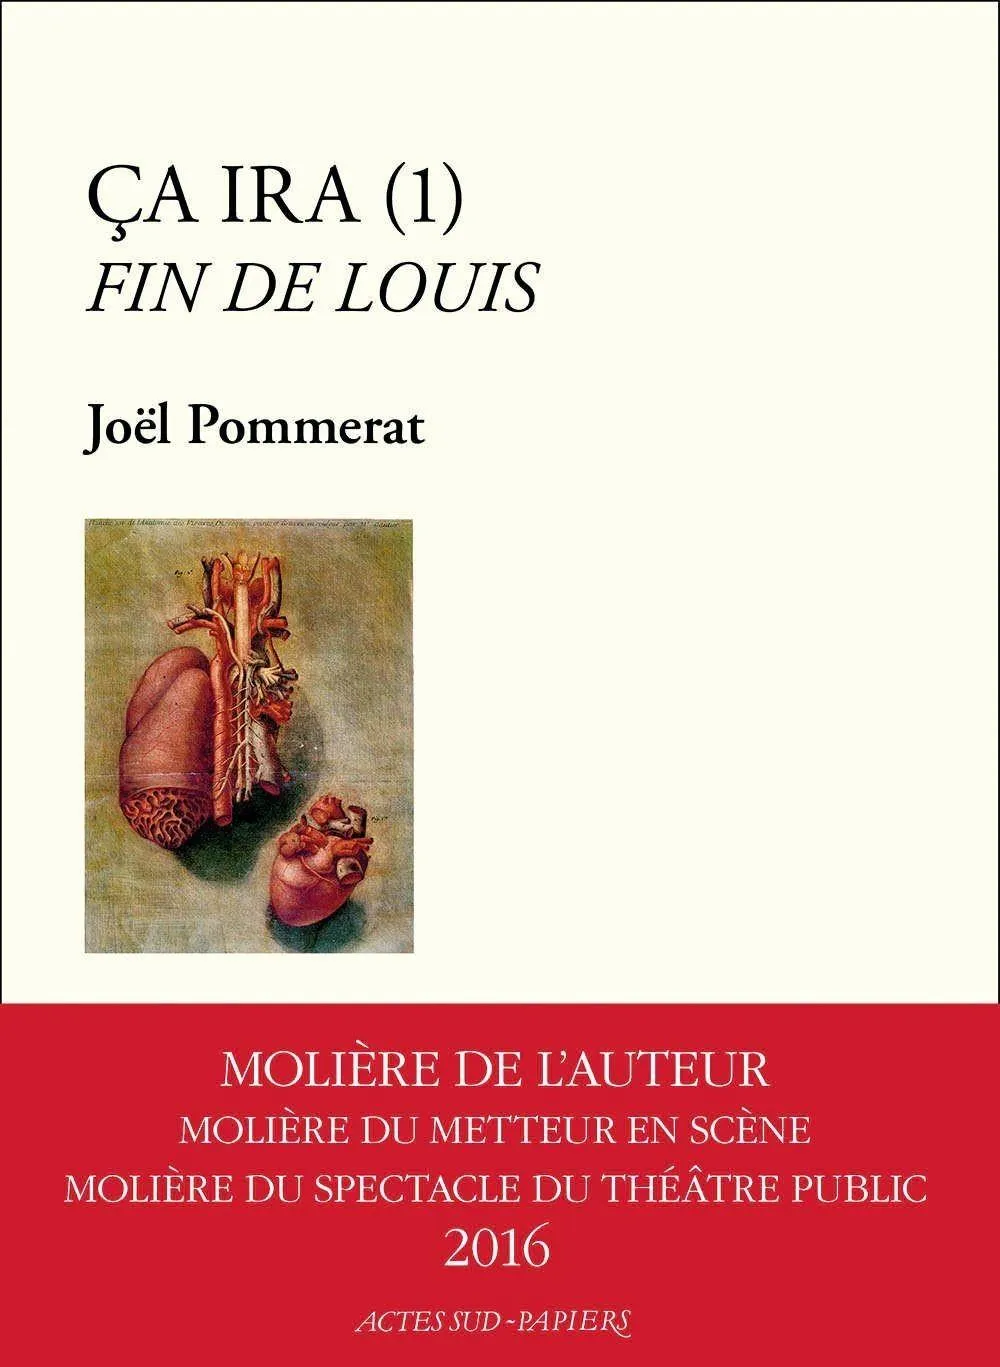 Joël Pommerat, Ça ira (1) Fin de Louis, Actes Sud, 2016.